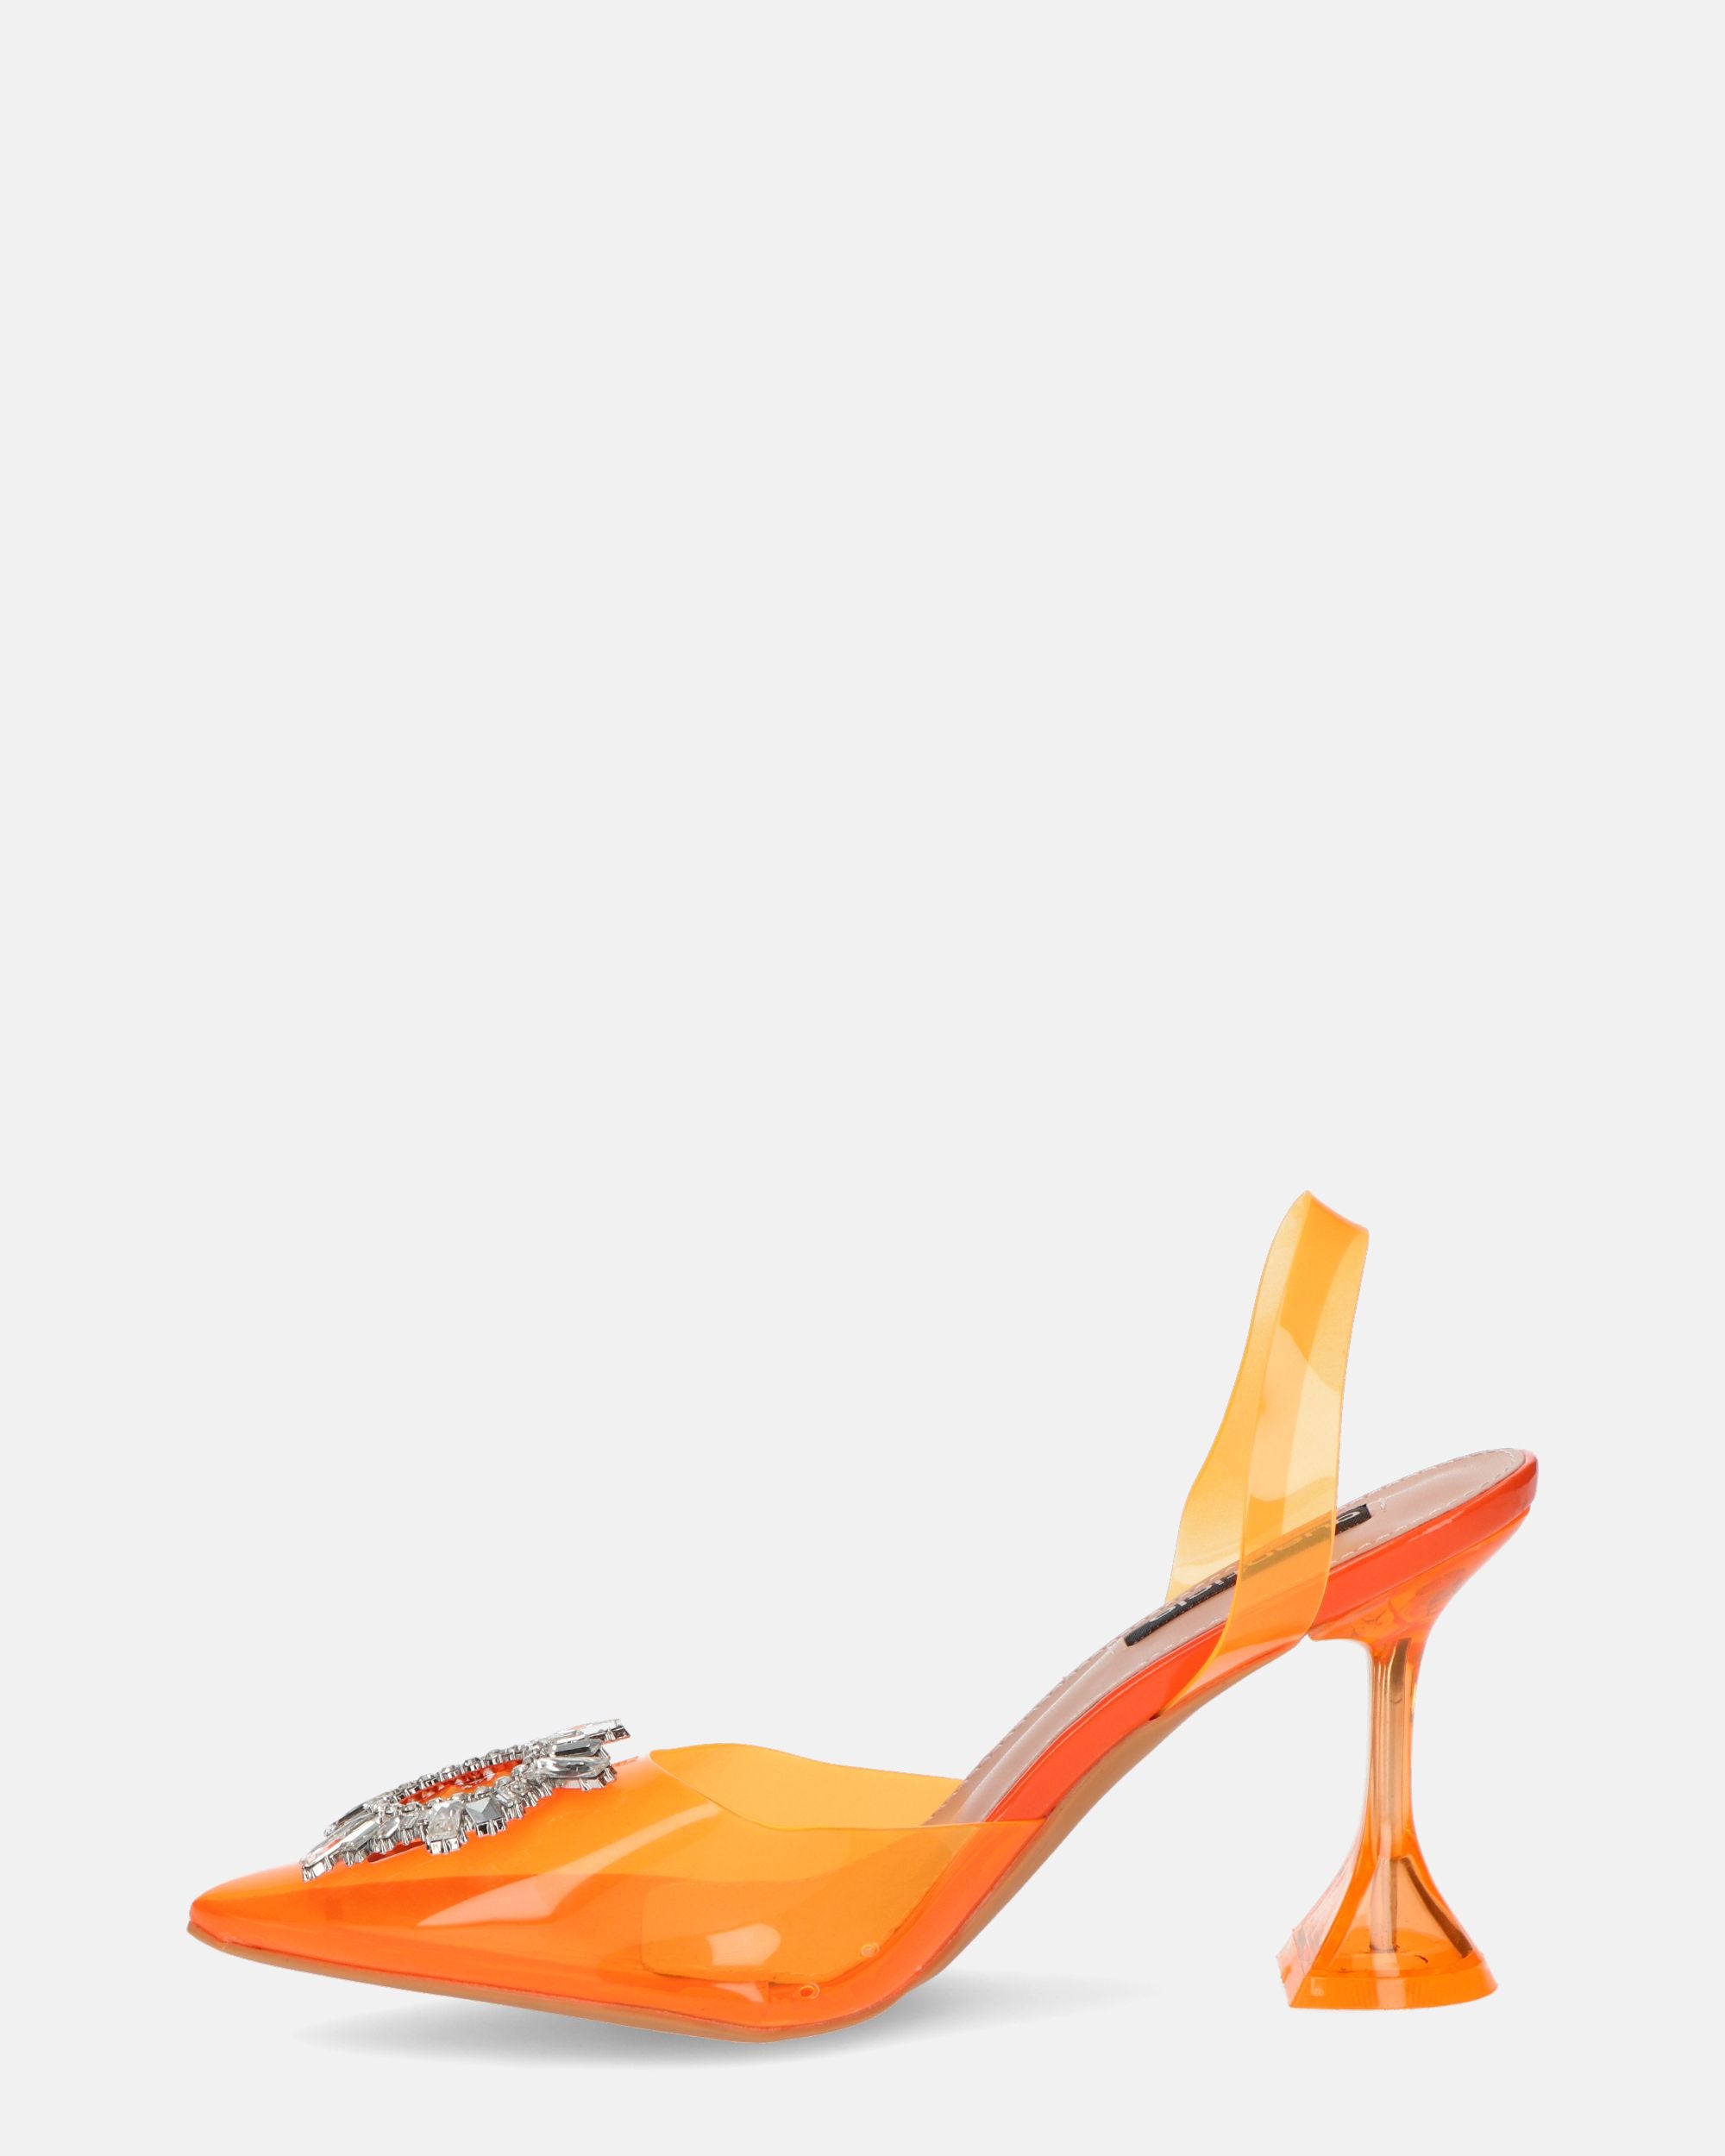 KENAN - scarpe in perspex arancio con decorazione di gemme in punta